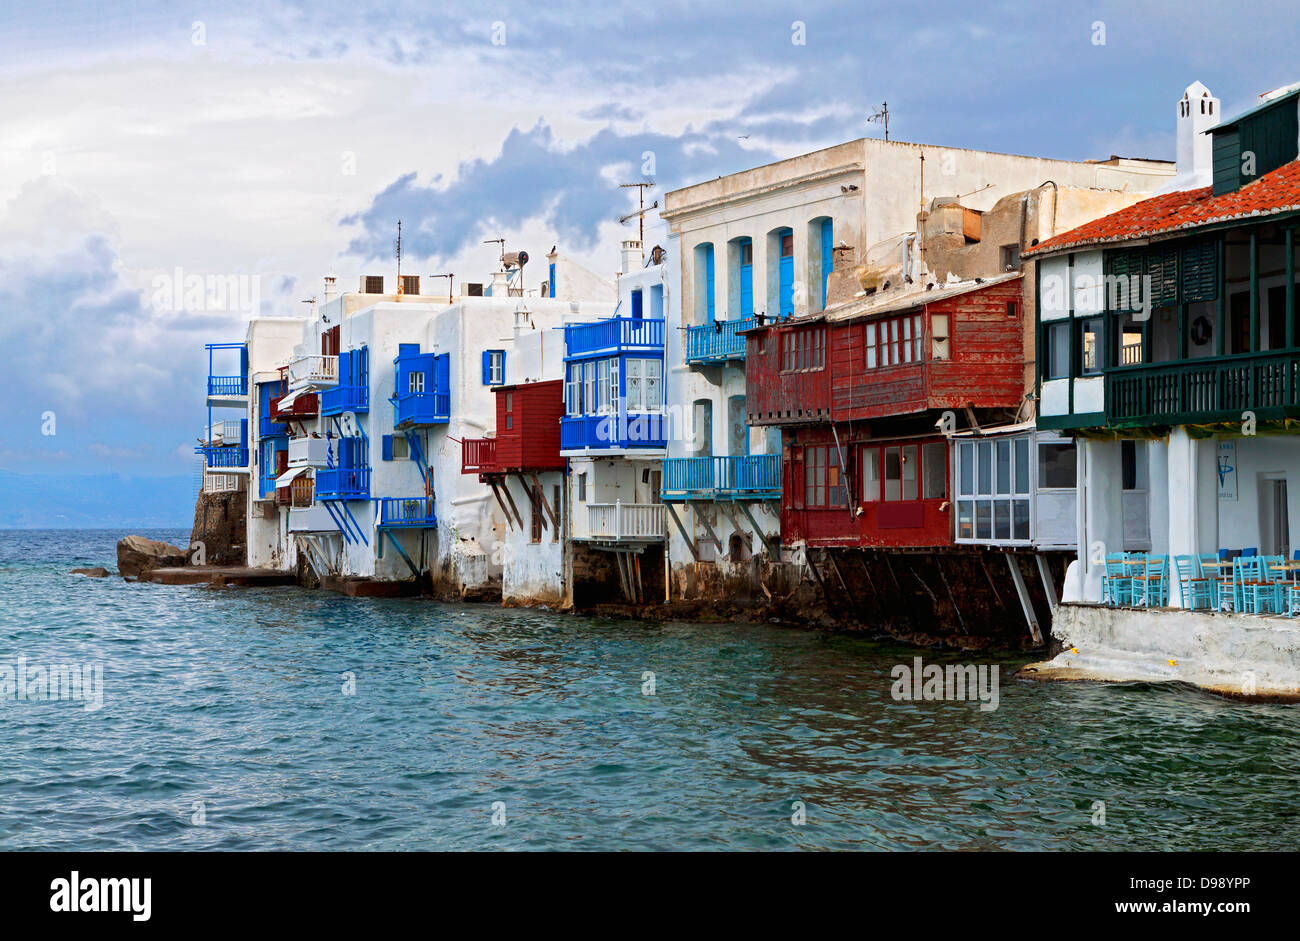 The small Venice of Mykonos island in Greece Stock Photo - Alamy